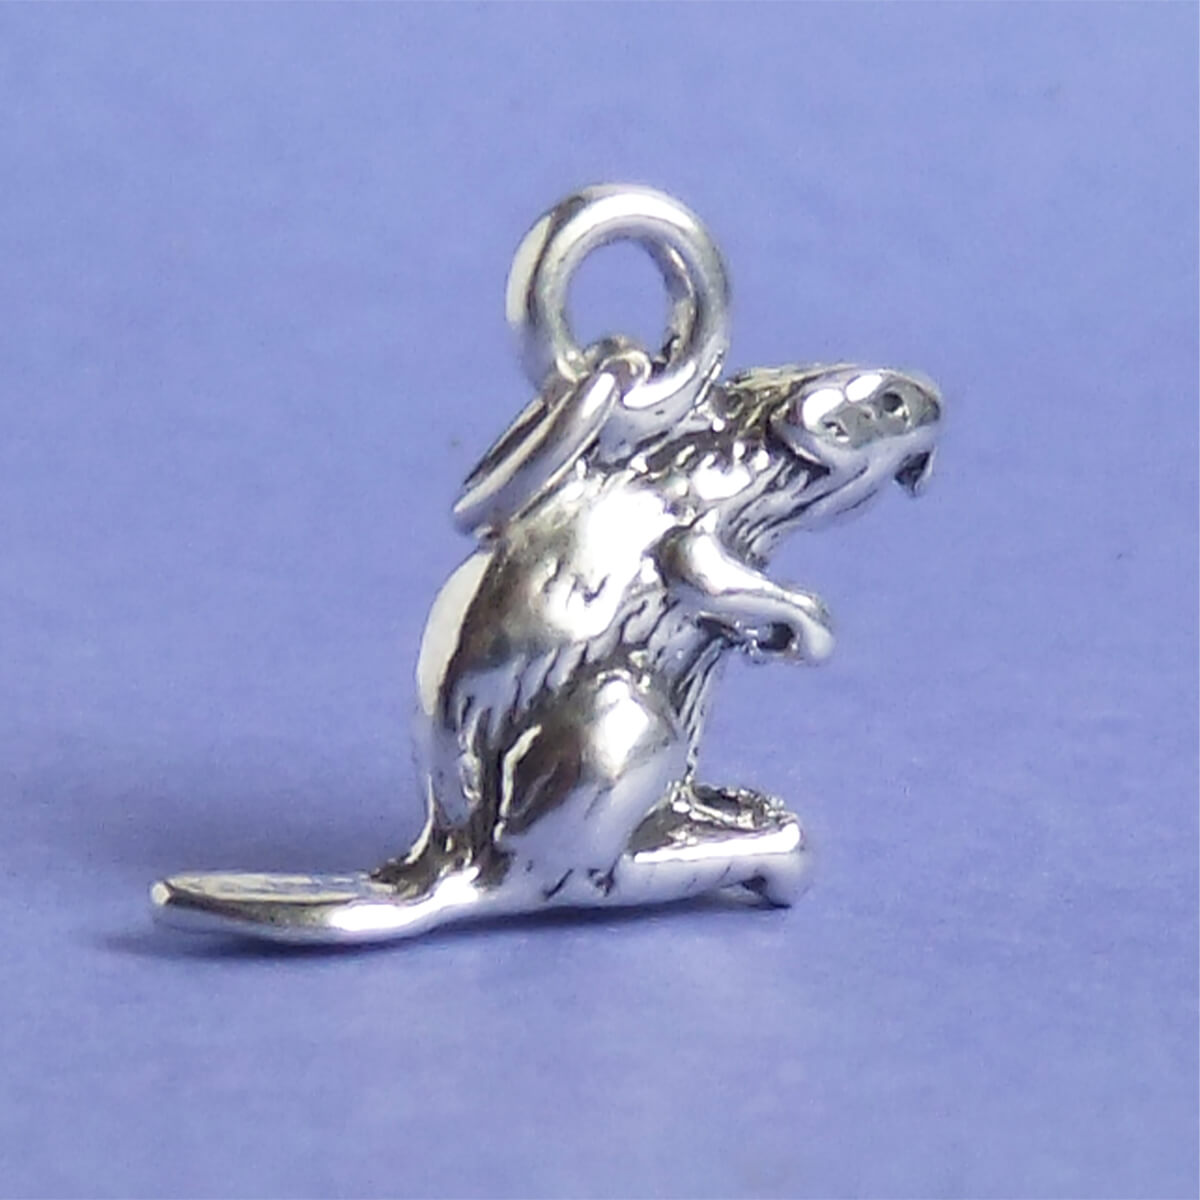 Beaver charm sterling silver wildlife pendant